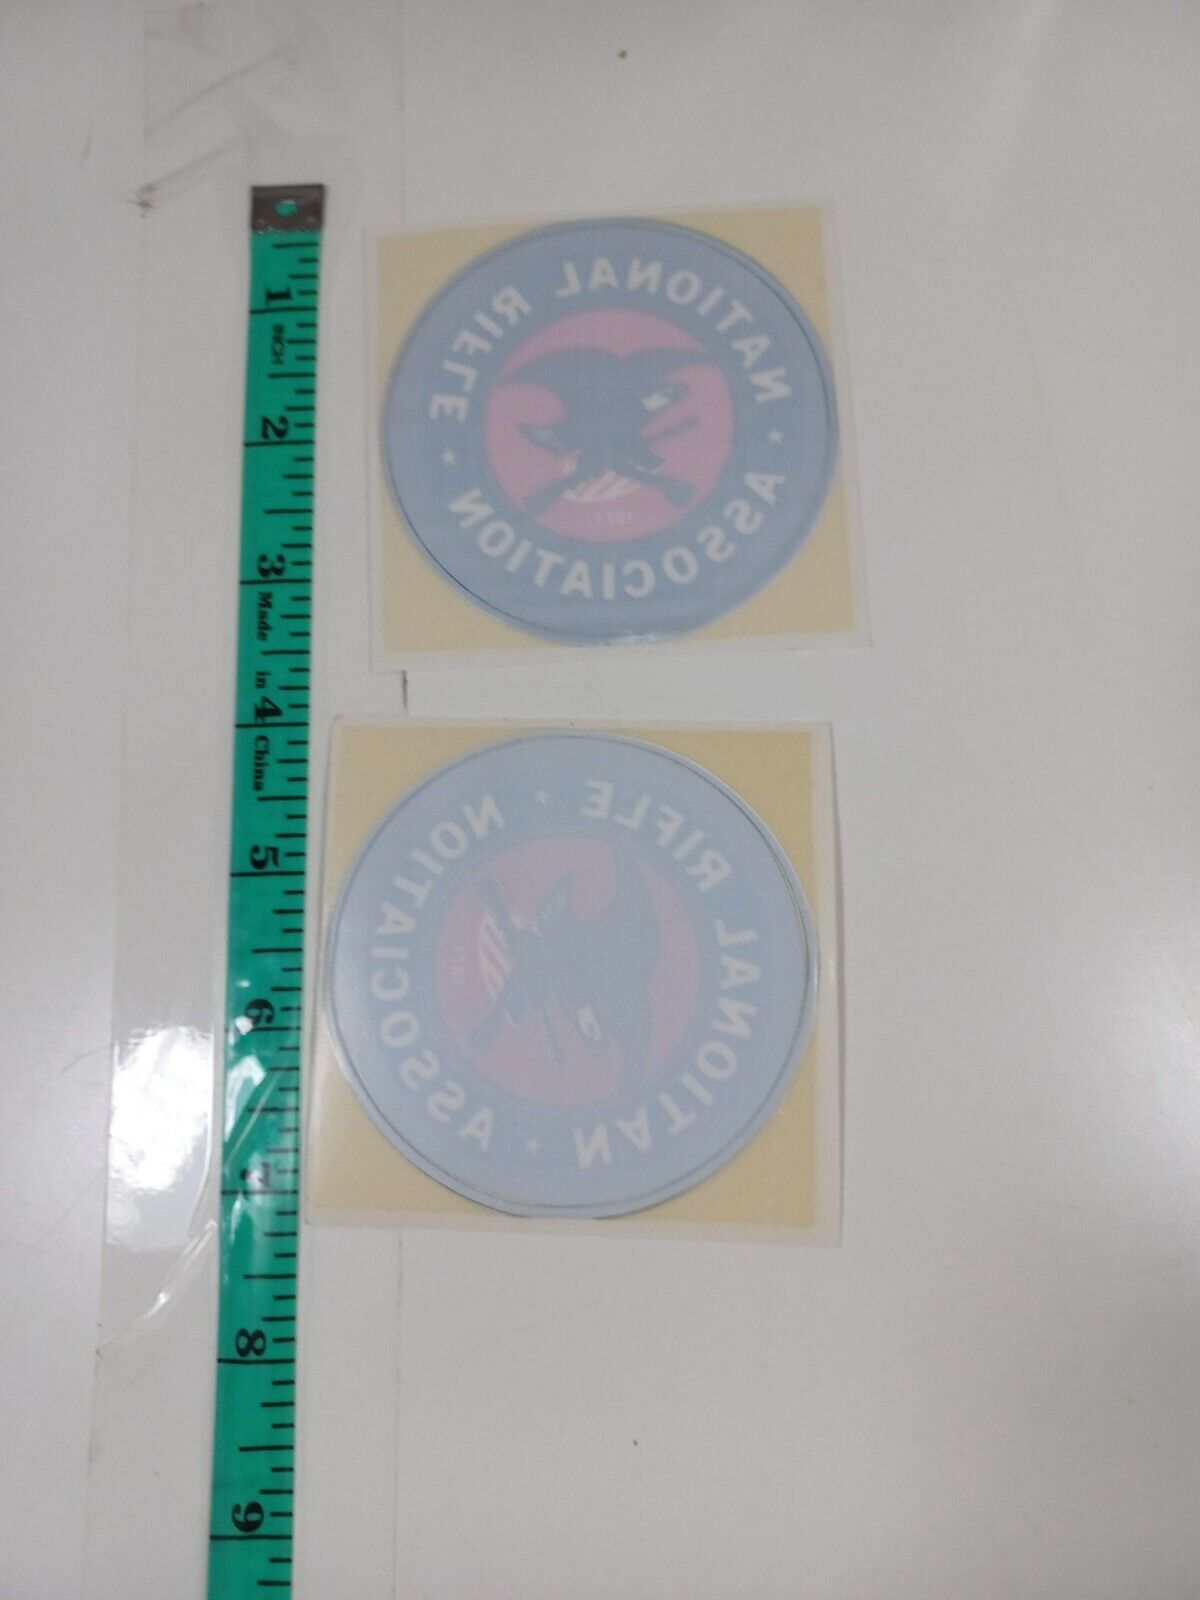 National rifle association set of 2 window stickers